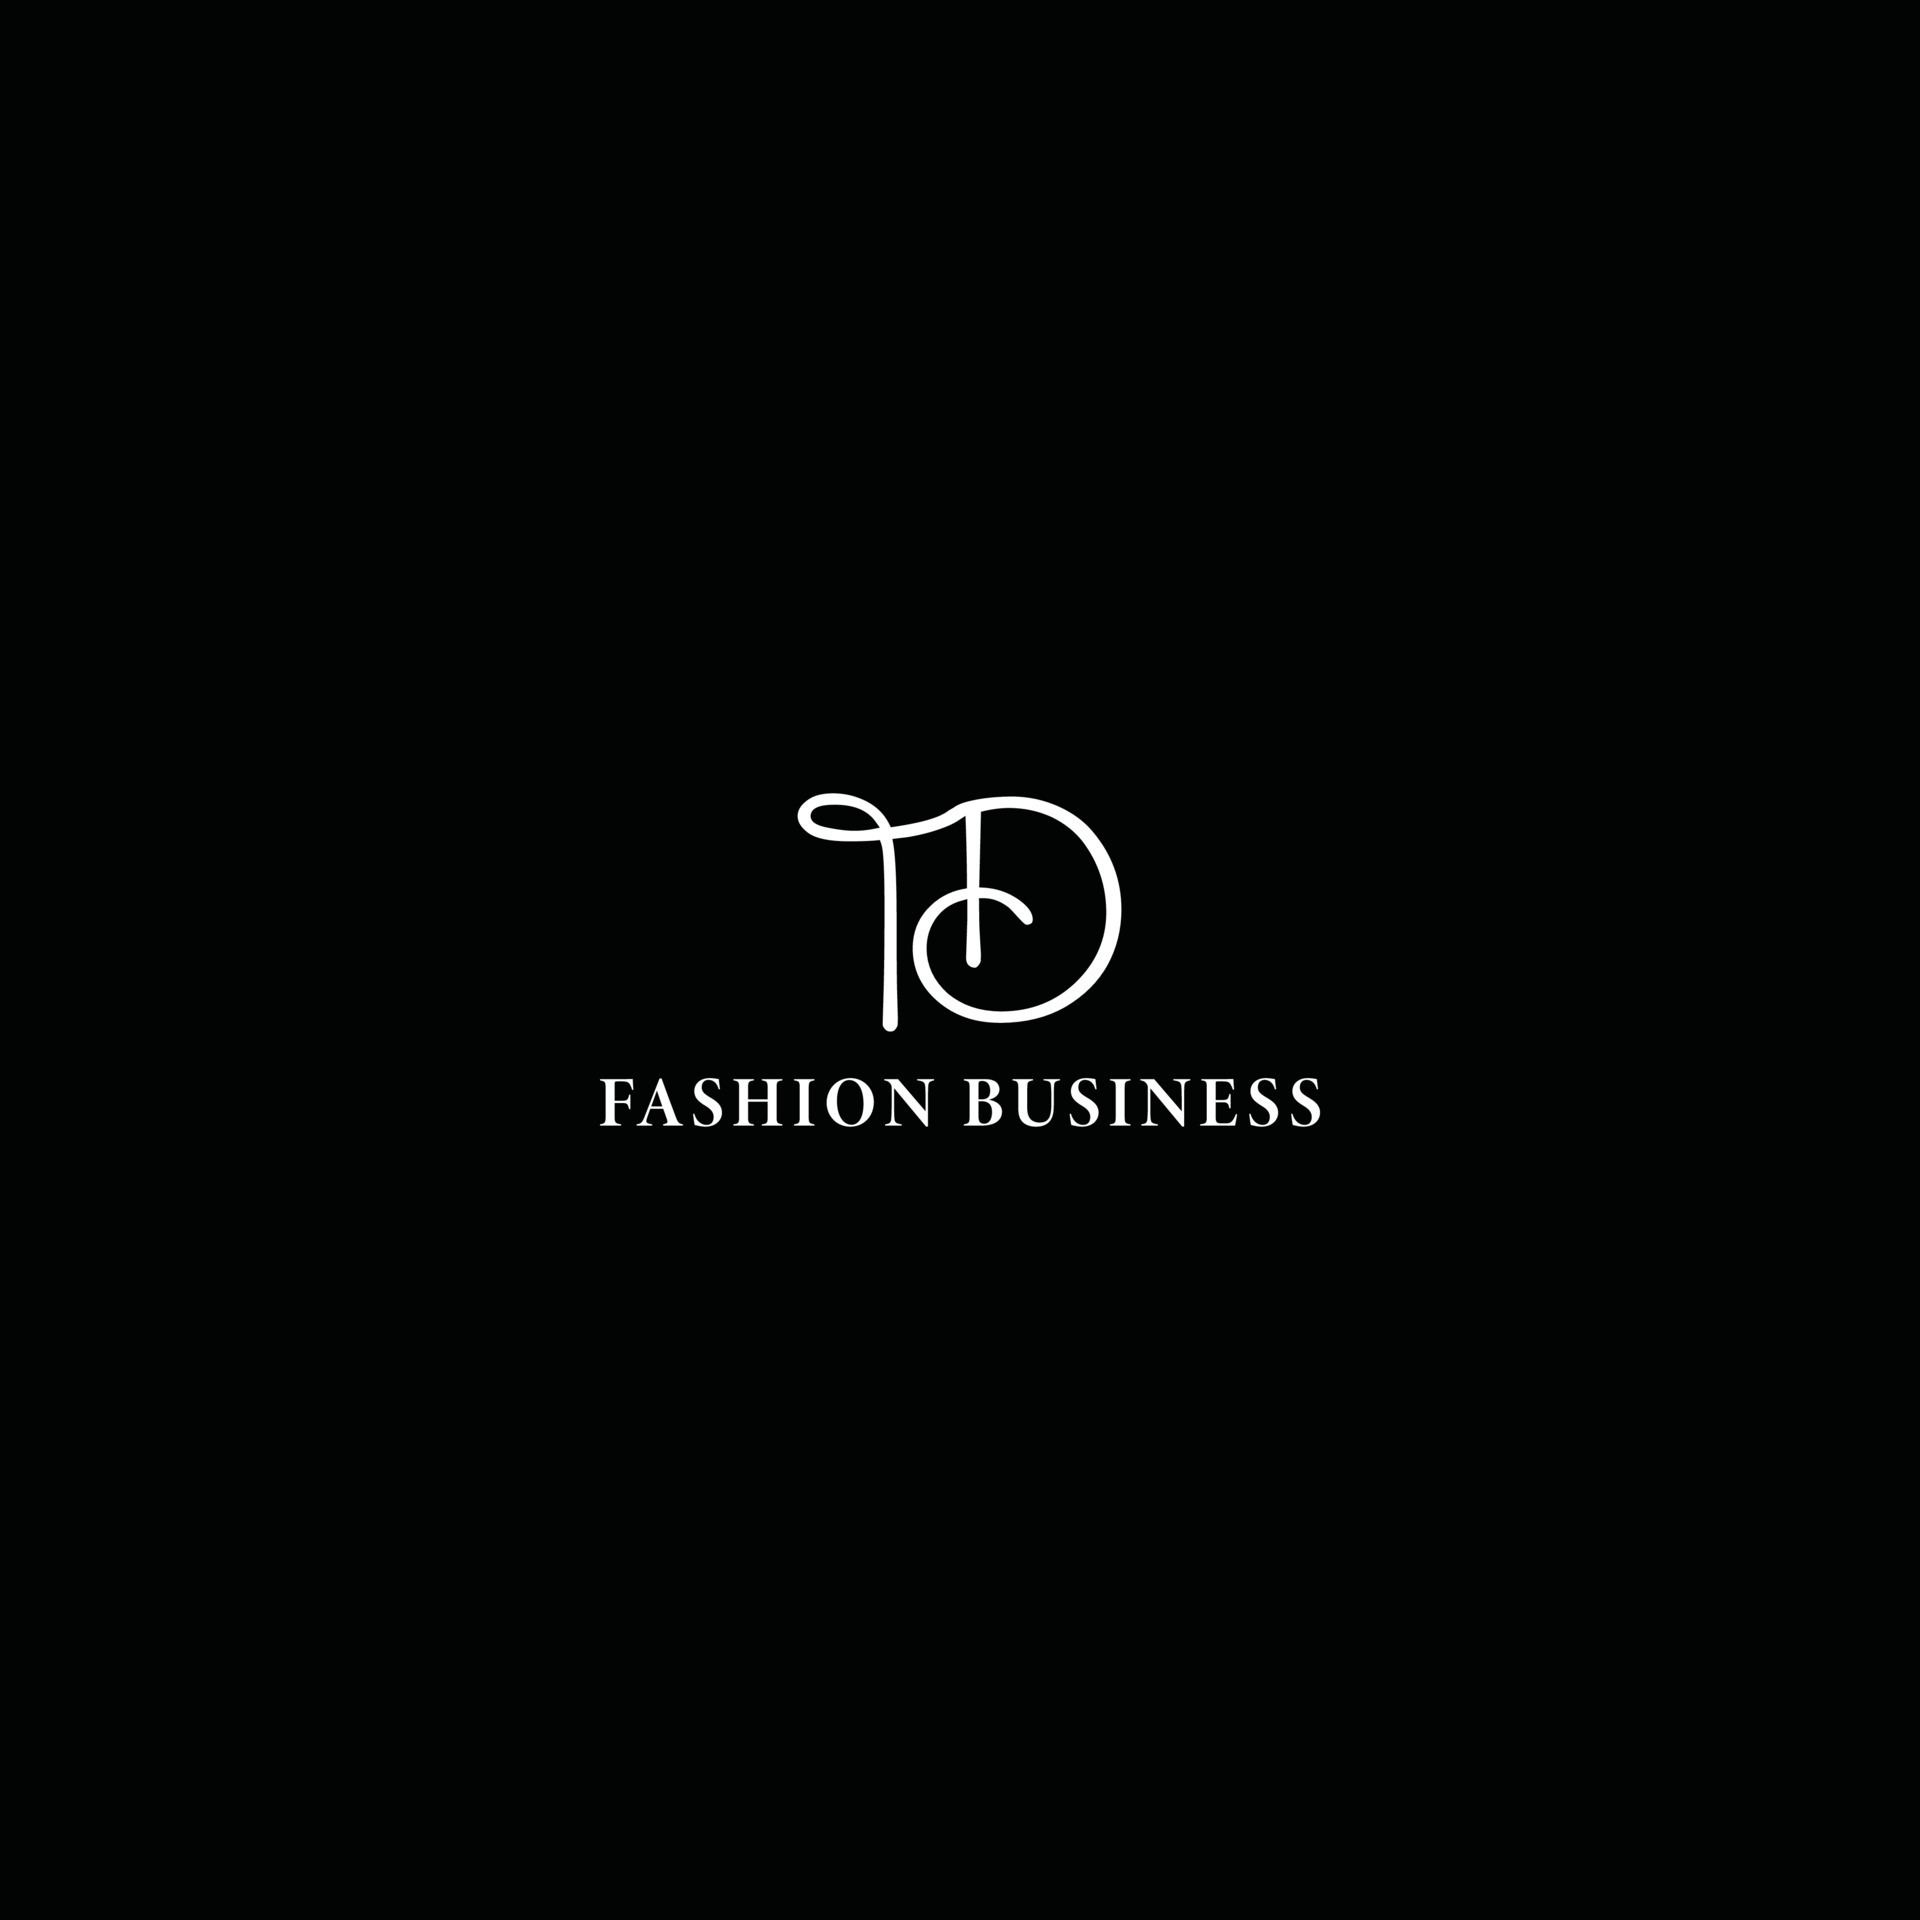 Fashion Designer Logos And Names